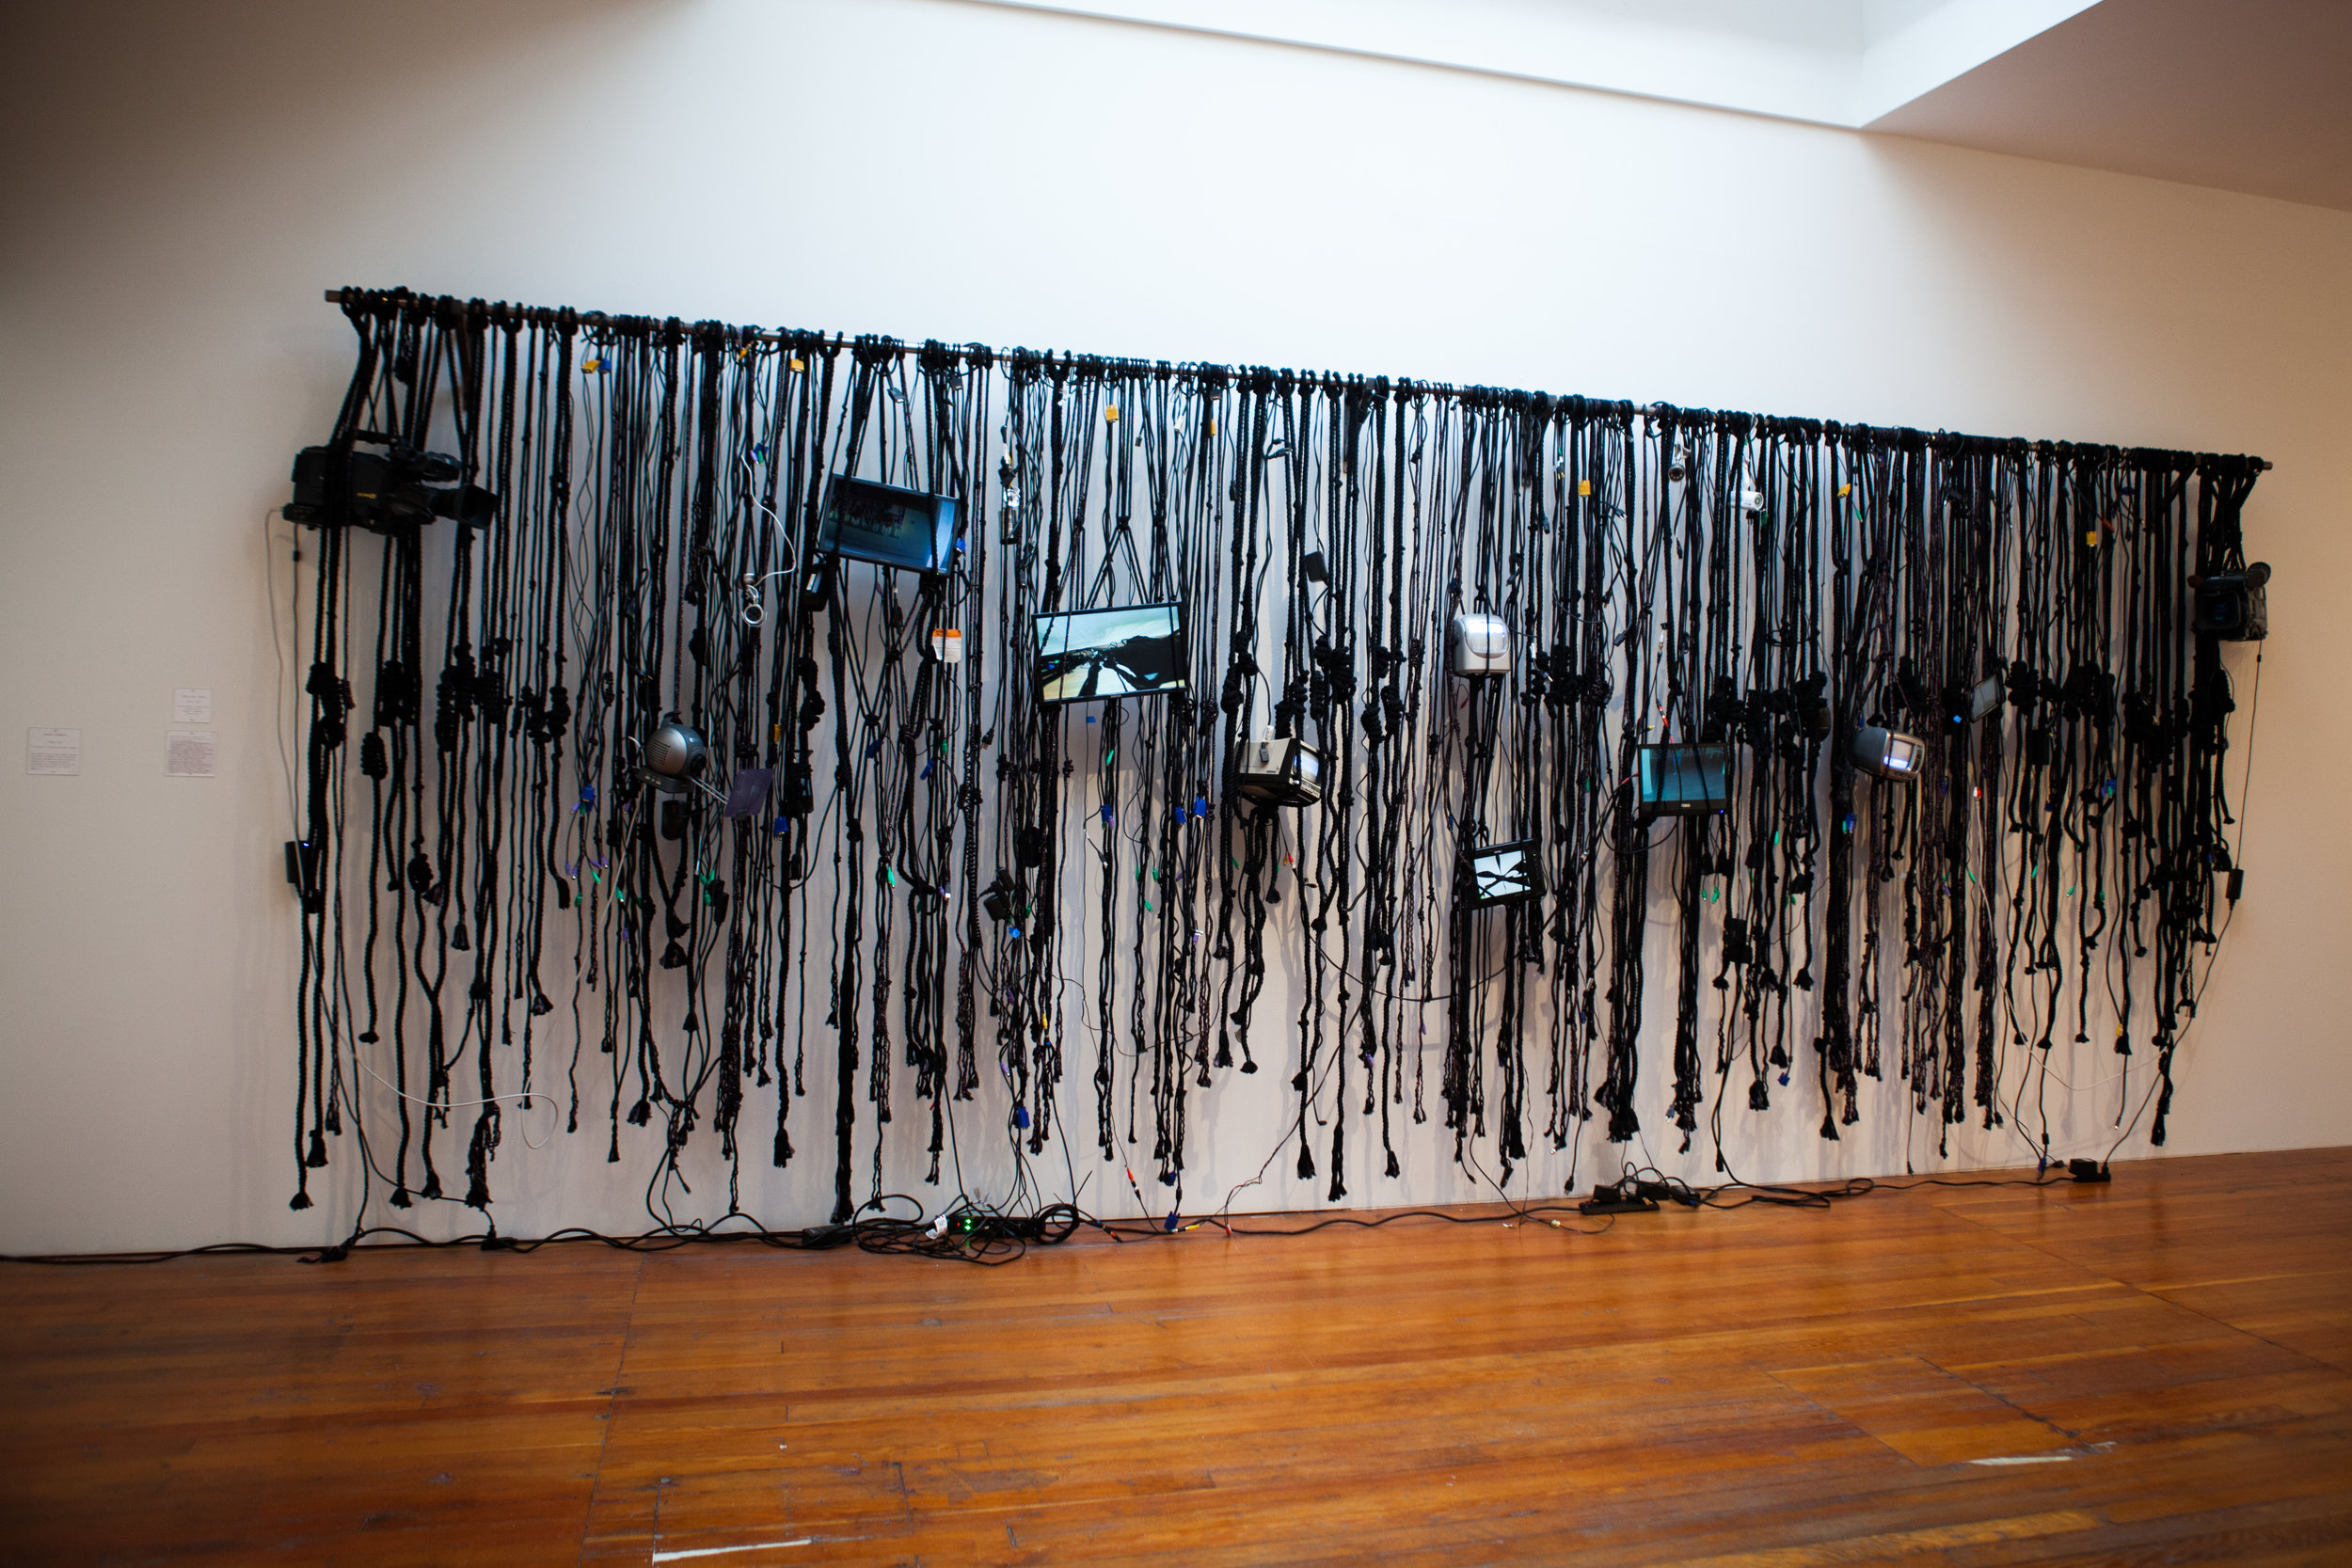   Installation view of Bruce Yonemoto's "1984"  